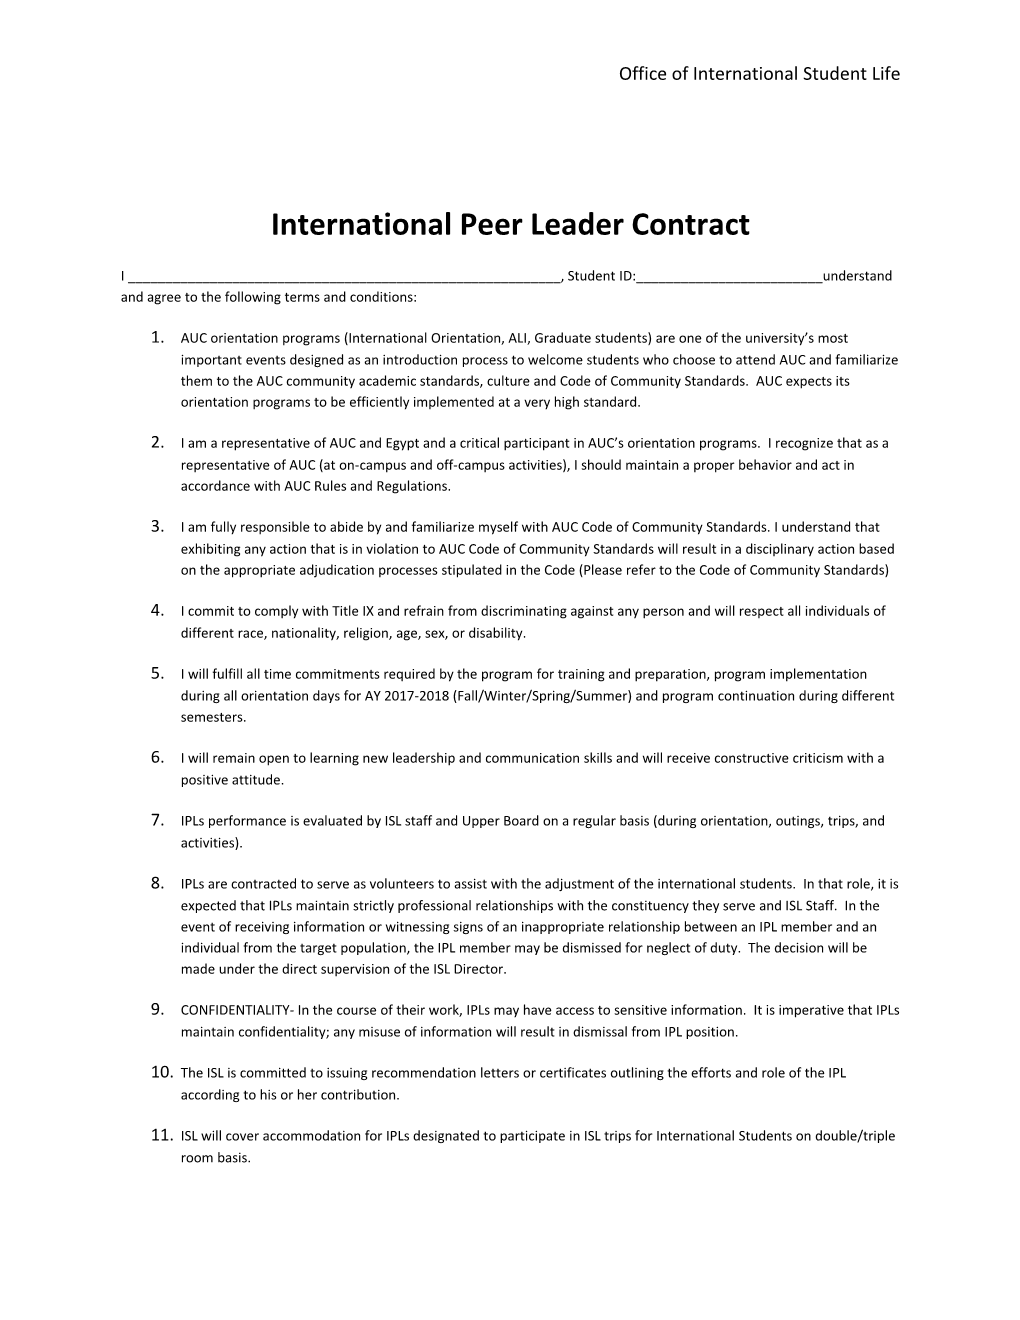 International Peer Leader Contract